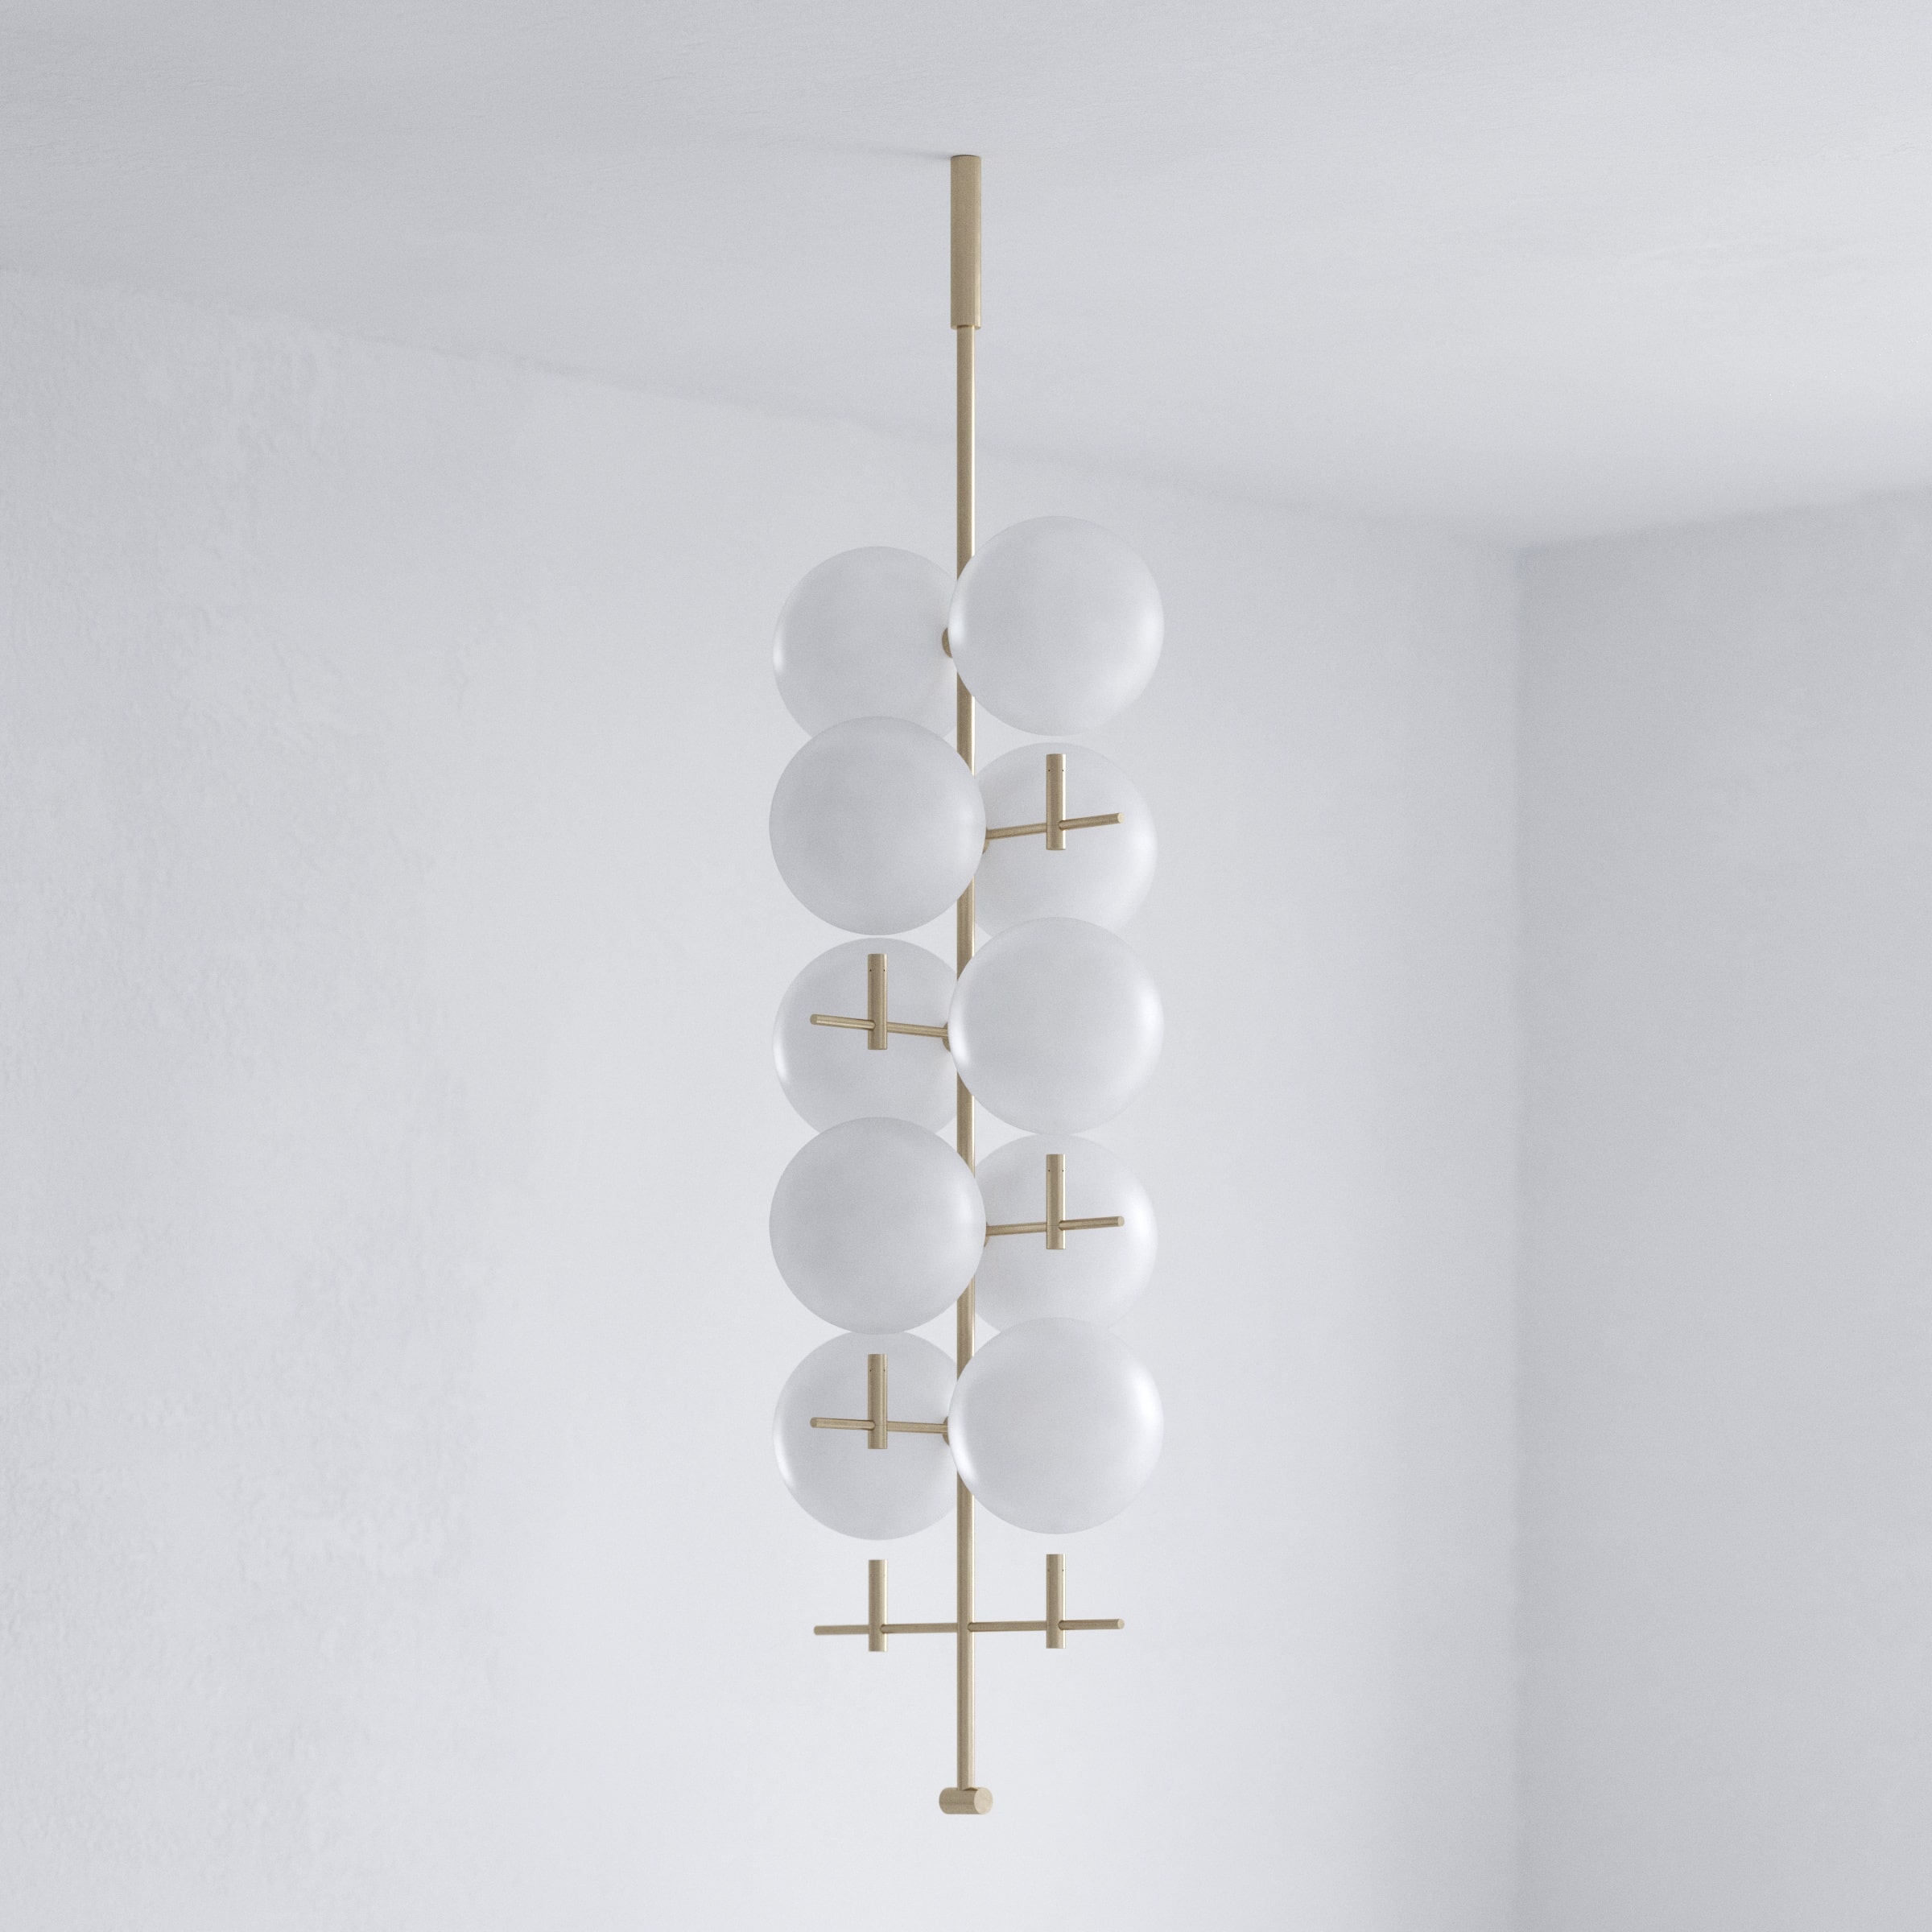 Handmade Luna Luminaries Collection of Lightning made of Glass and Brass Ten Lamps